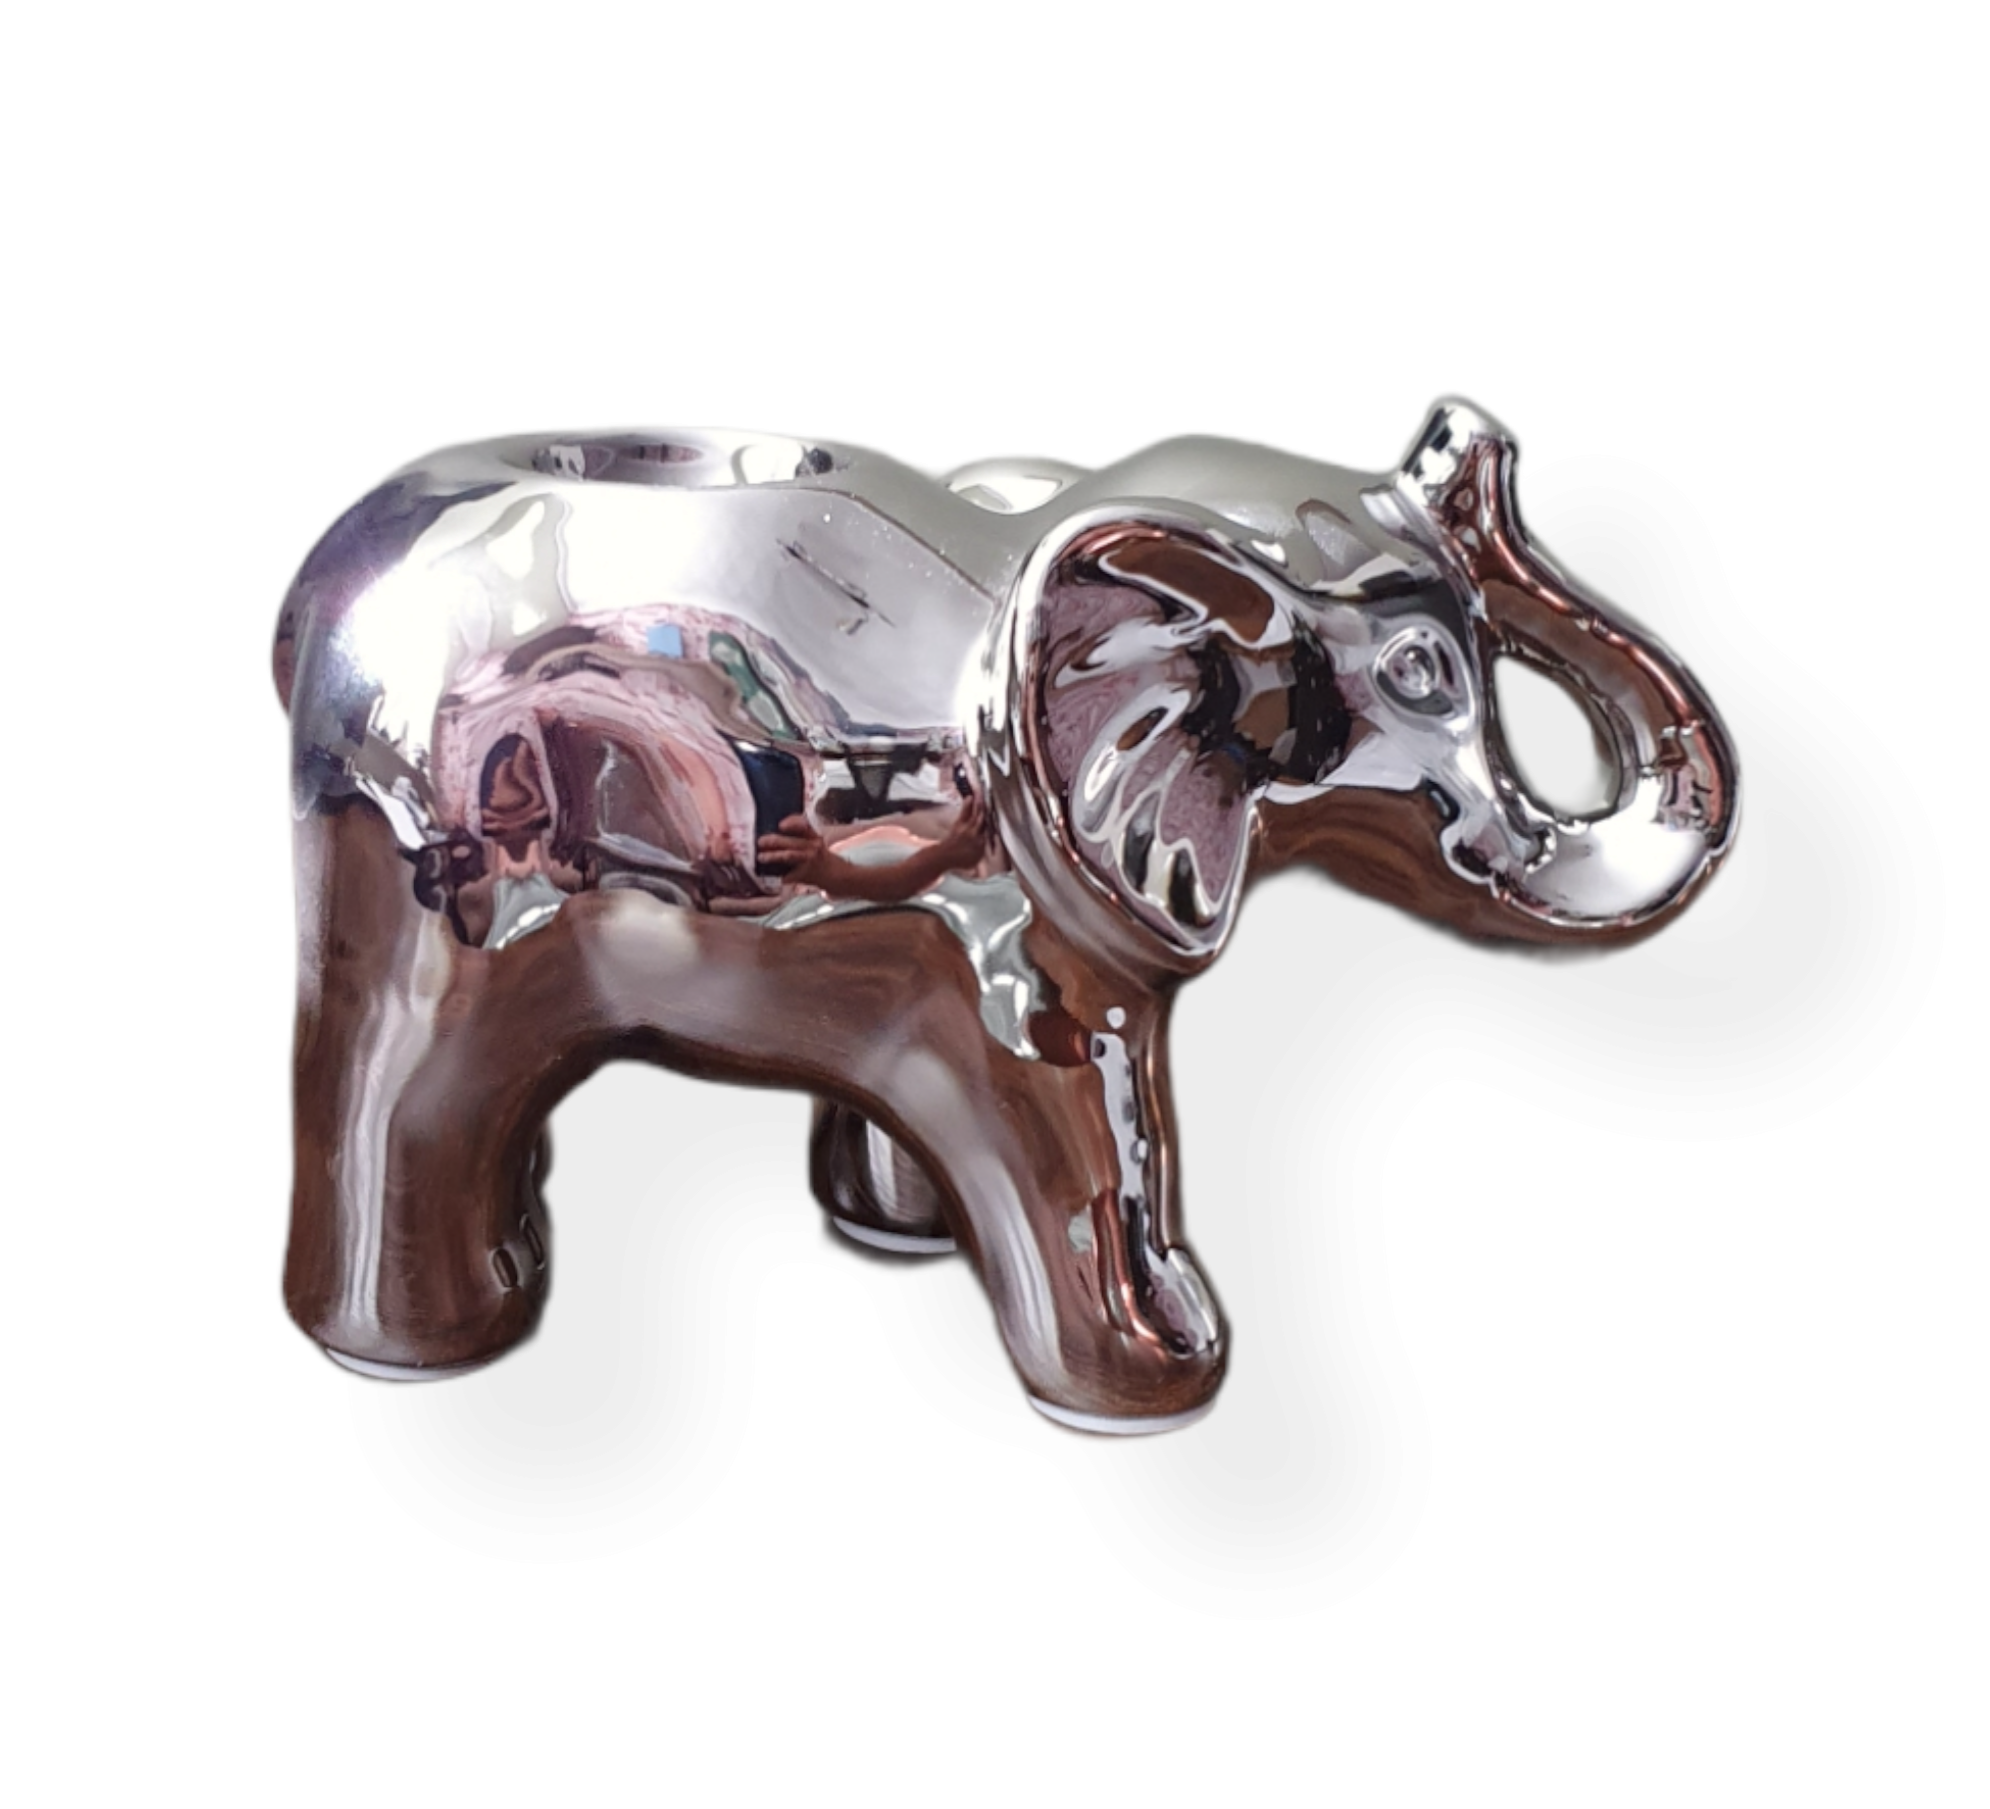 Shiny silver ceramic elephant facing the right trunk up.